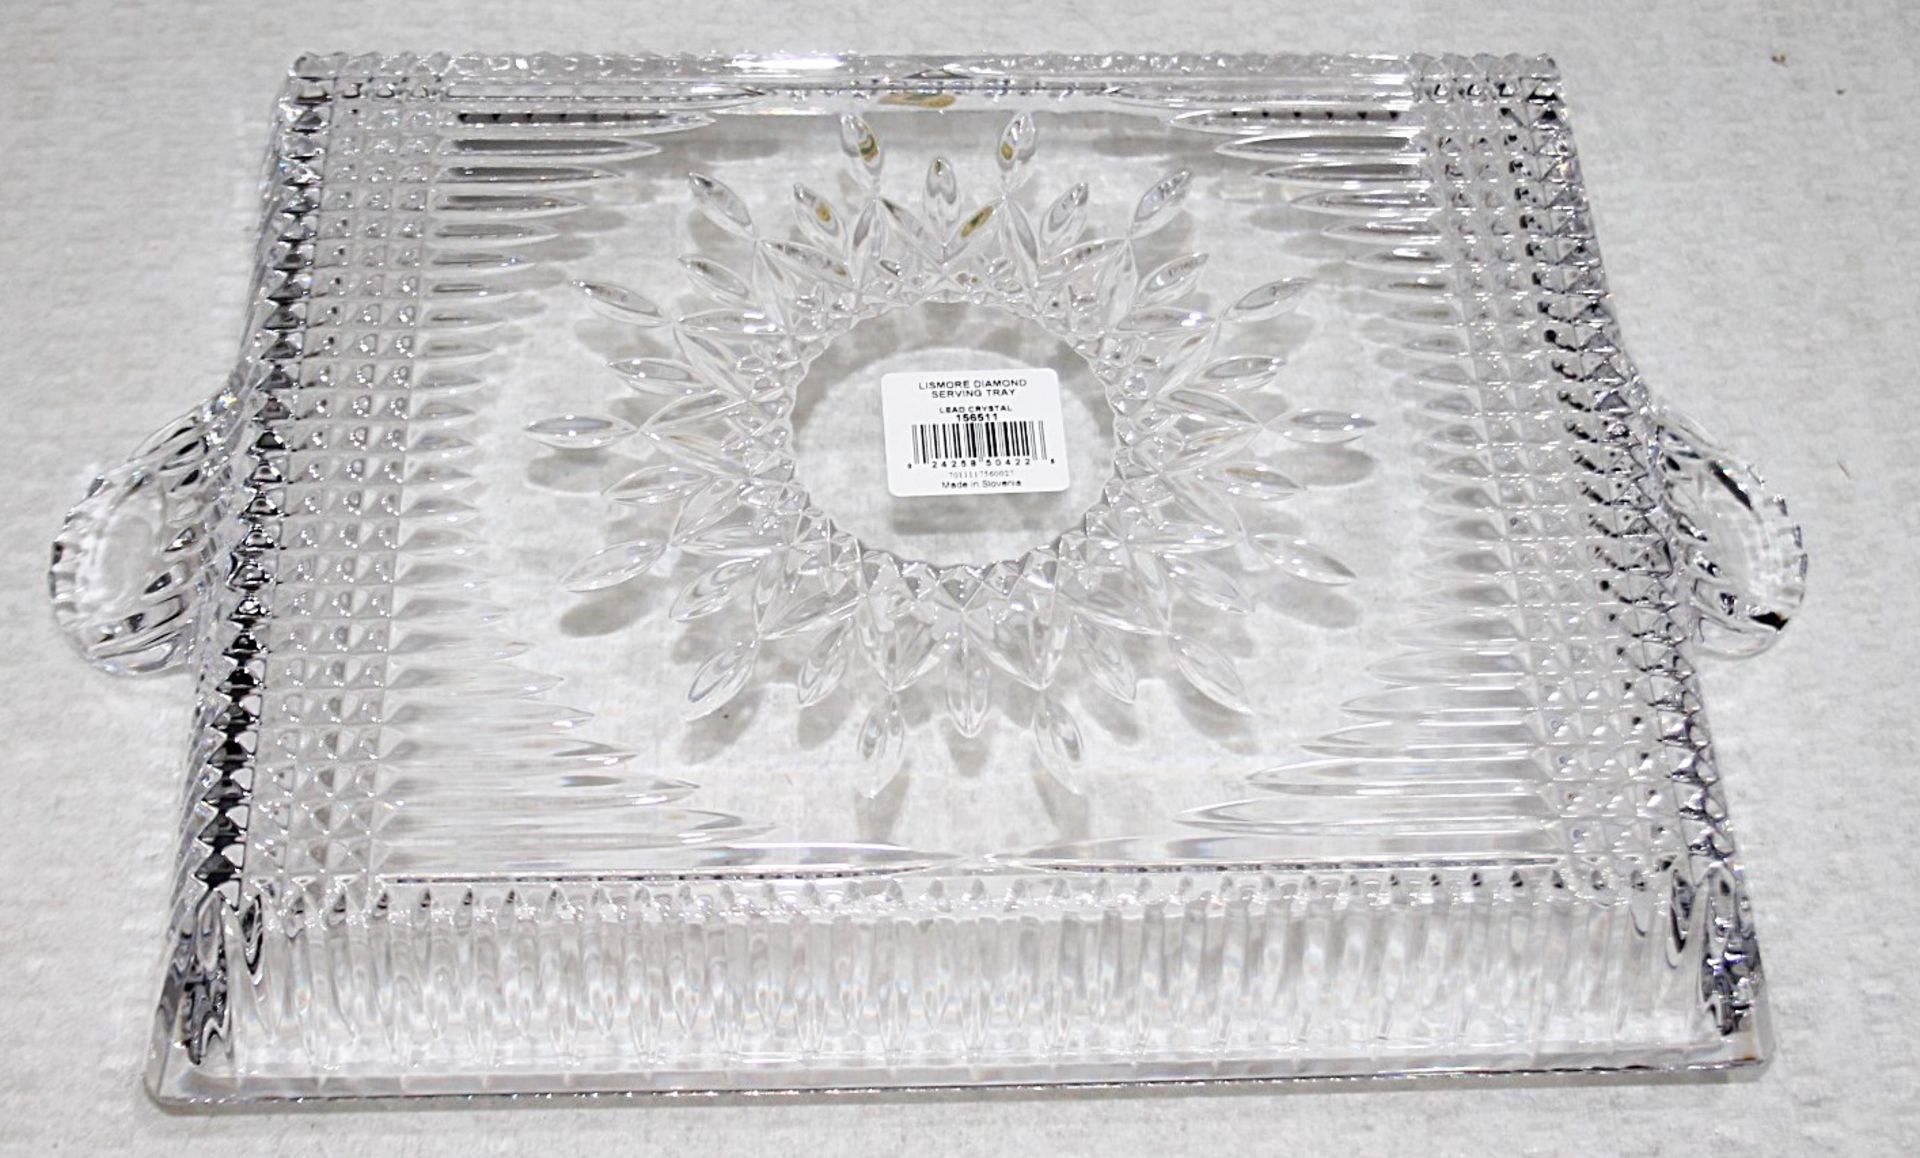 1 x WATERFORD 'Lismore Diamond' Lead Crystal Serving Tray - Original Price £210.00 - Unused Boxed - Image 3 of 7